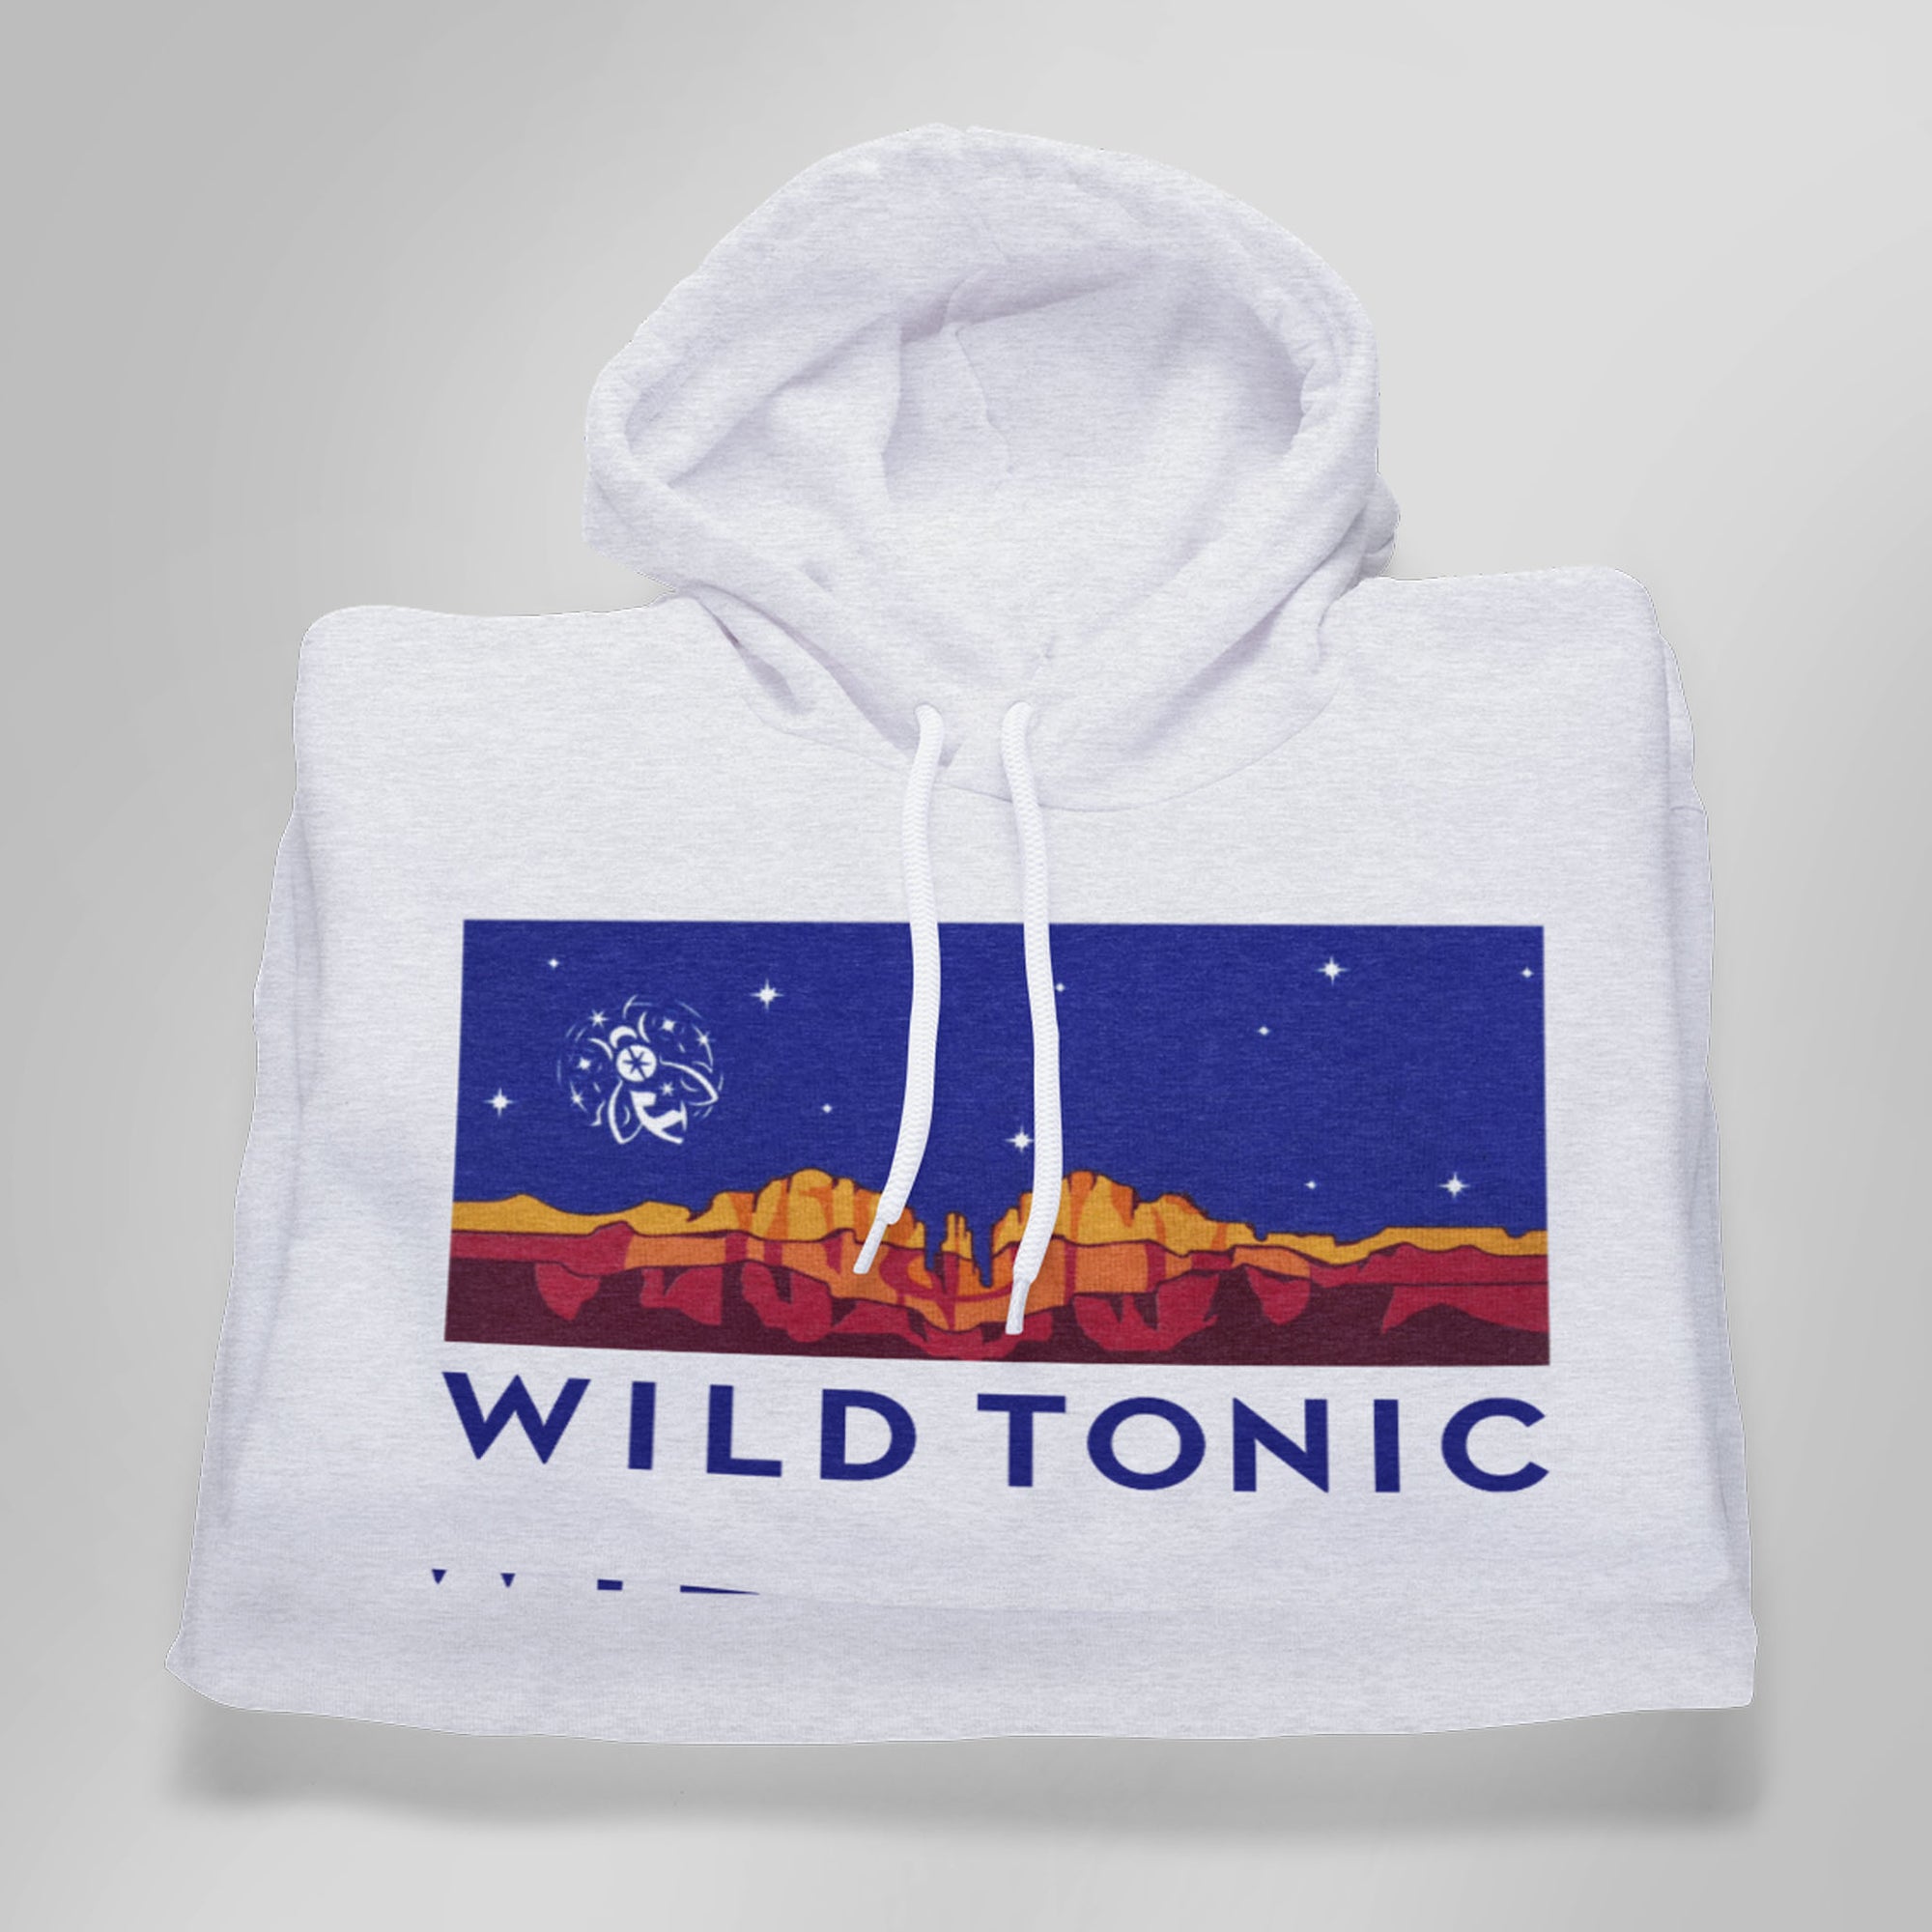 Wild Tonic White Hoodie Sweatshirt (with Sedona mountains)